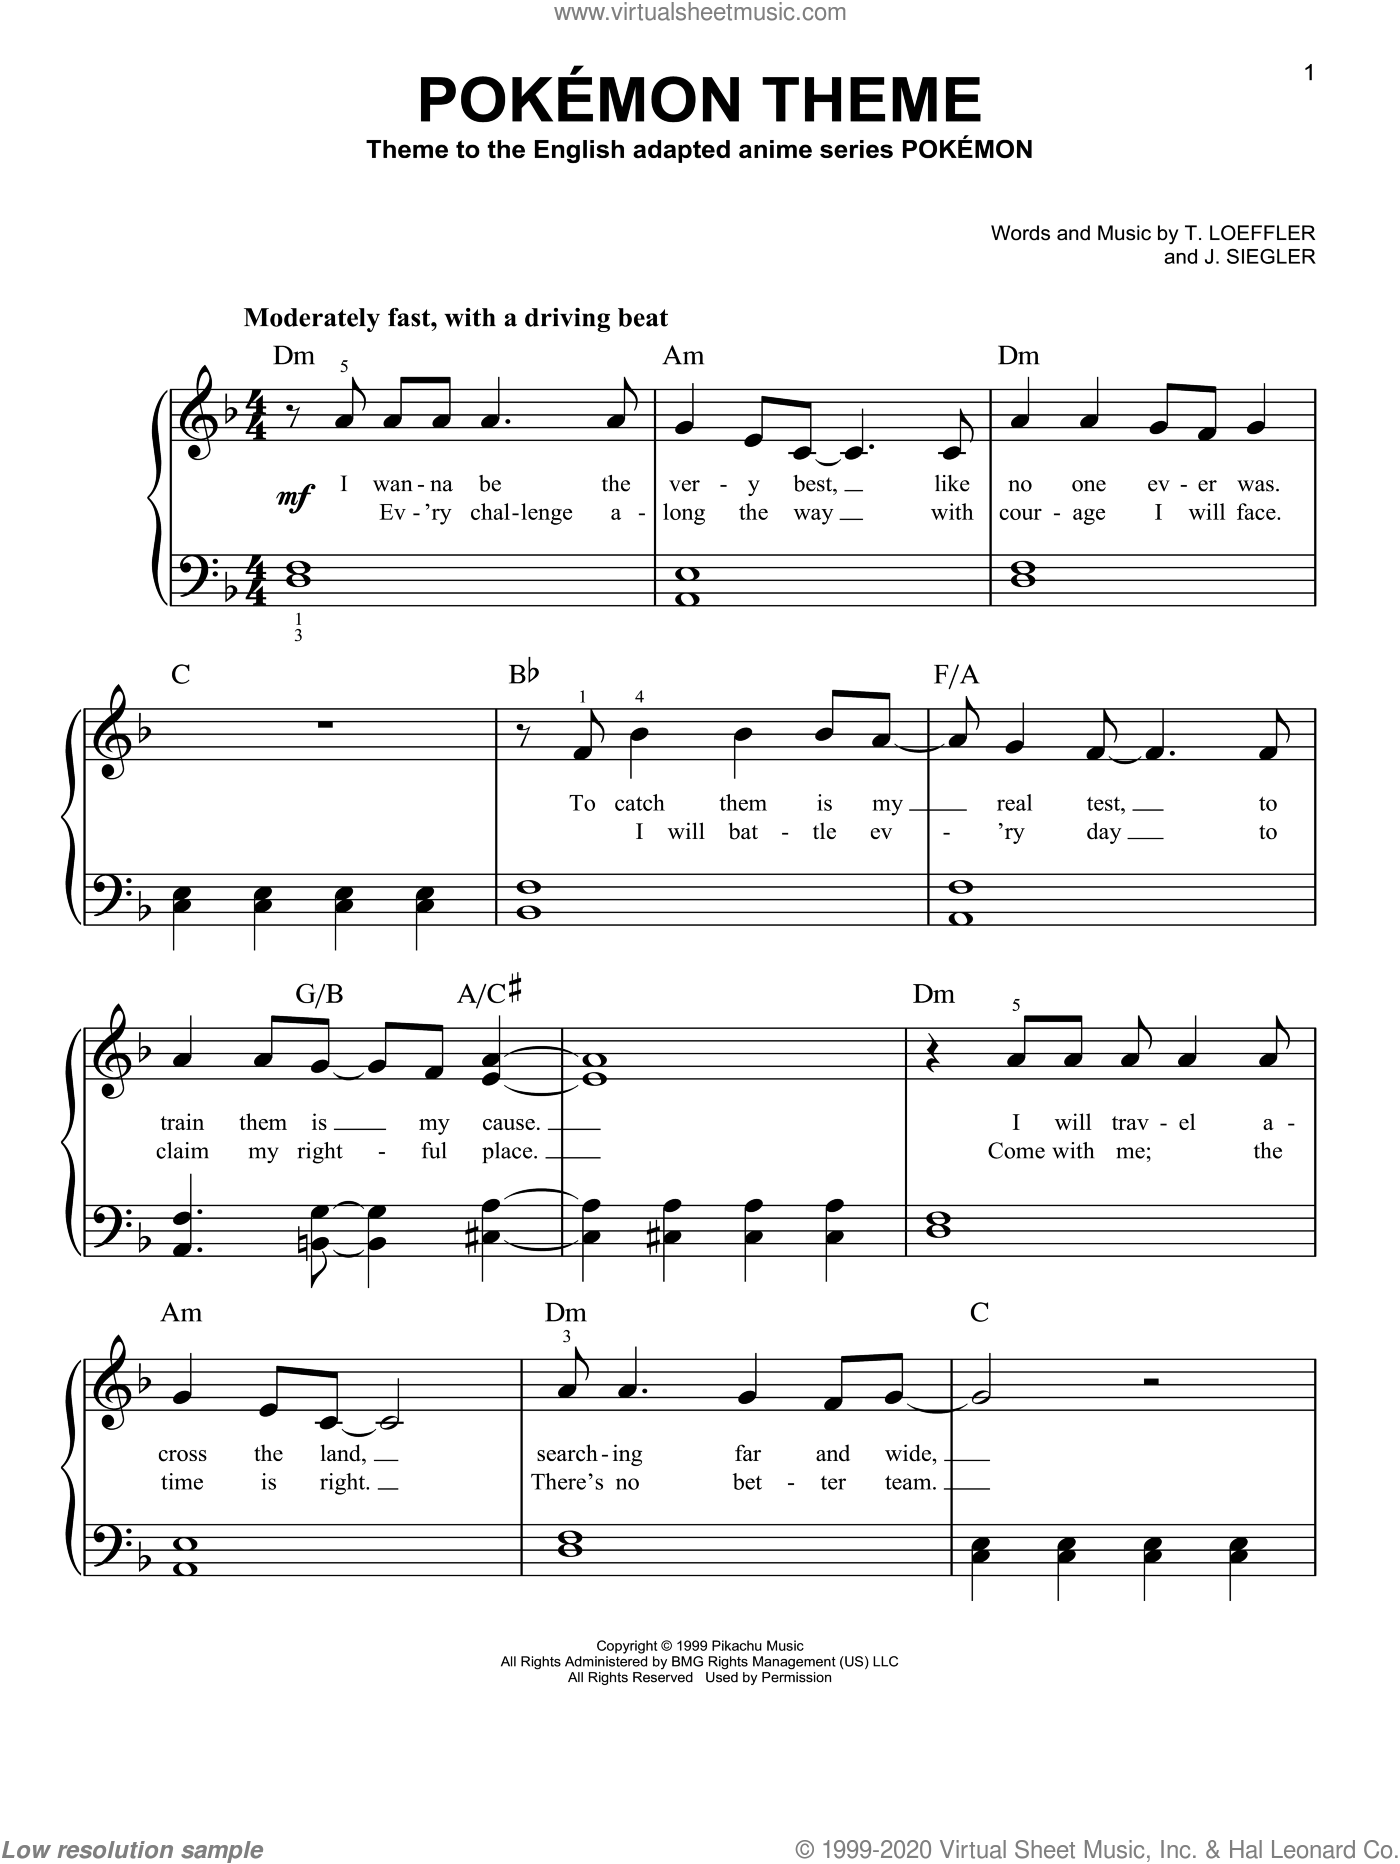 Siegler - Pokemon Theme sheet music for piano solo (PDF)